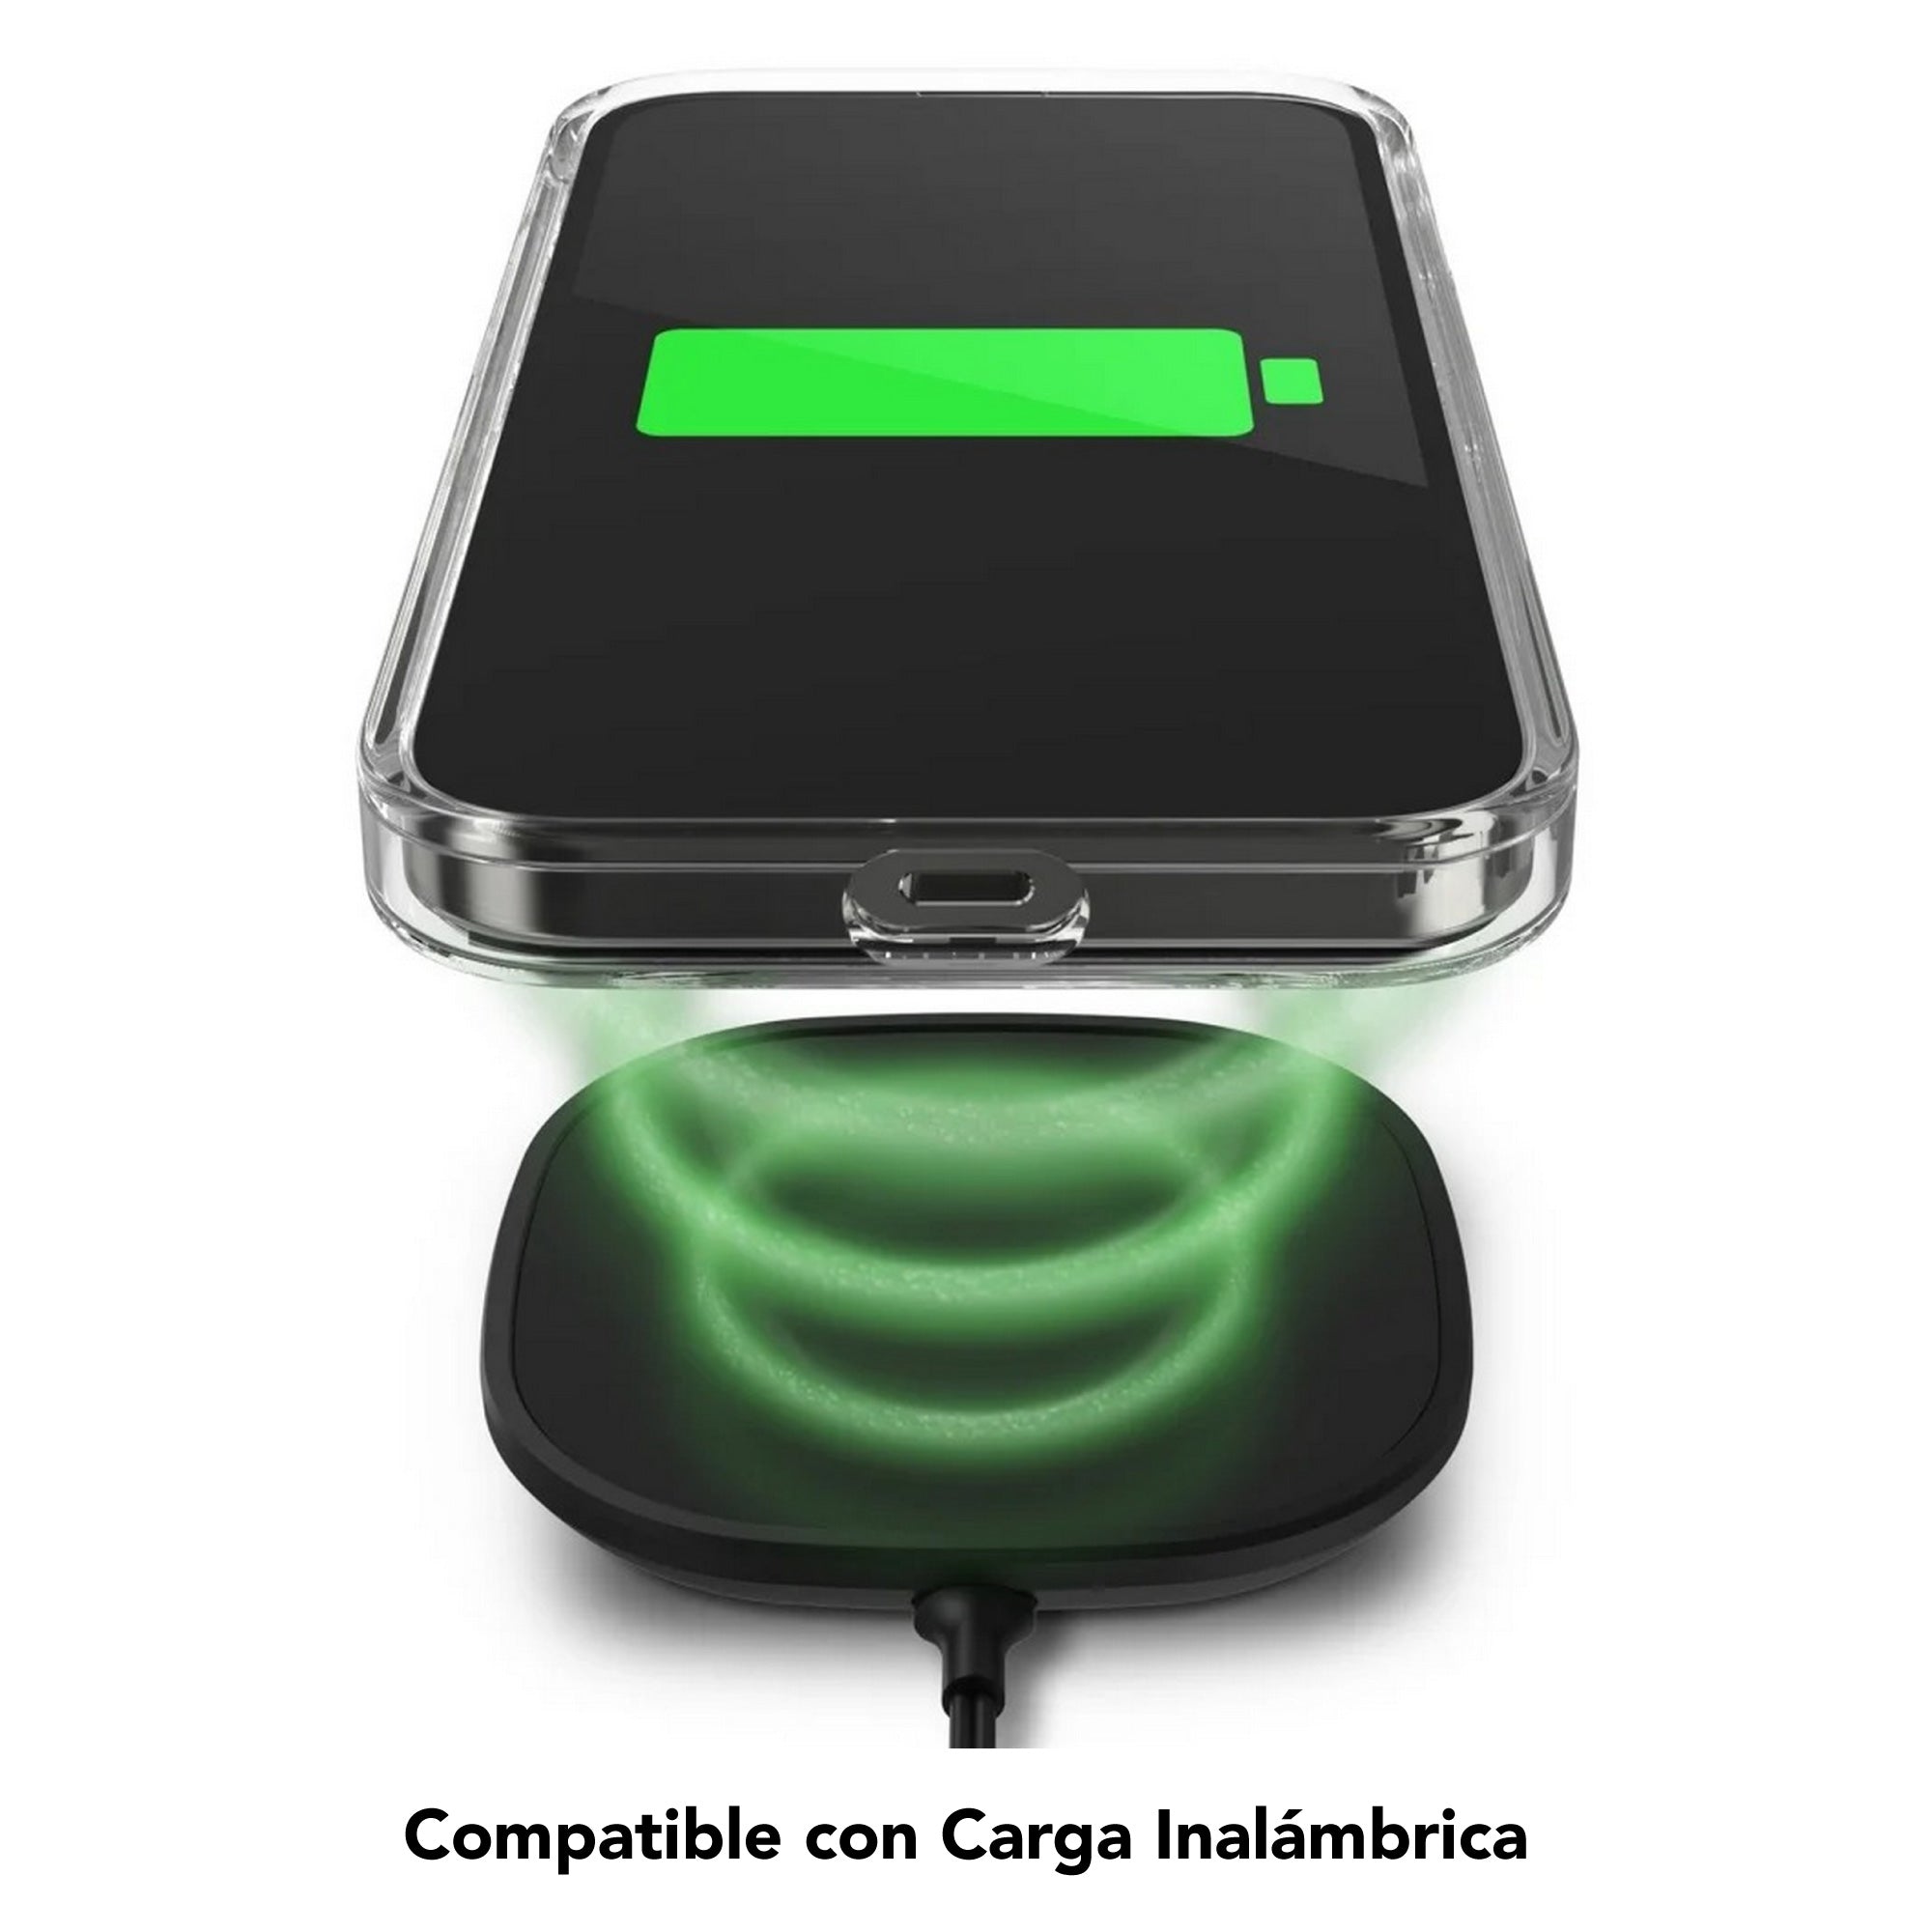 Case Gear4 Crystal Palace Snap compatible con MagSafe para iPhone 14 / 13 - Transparente